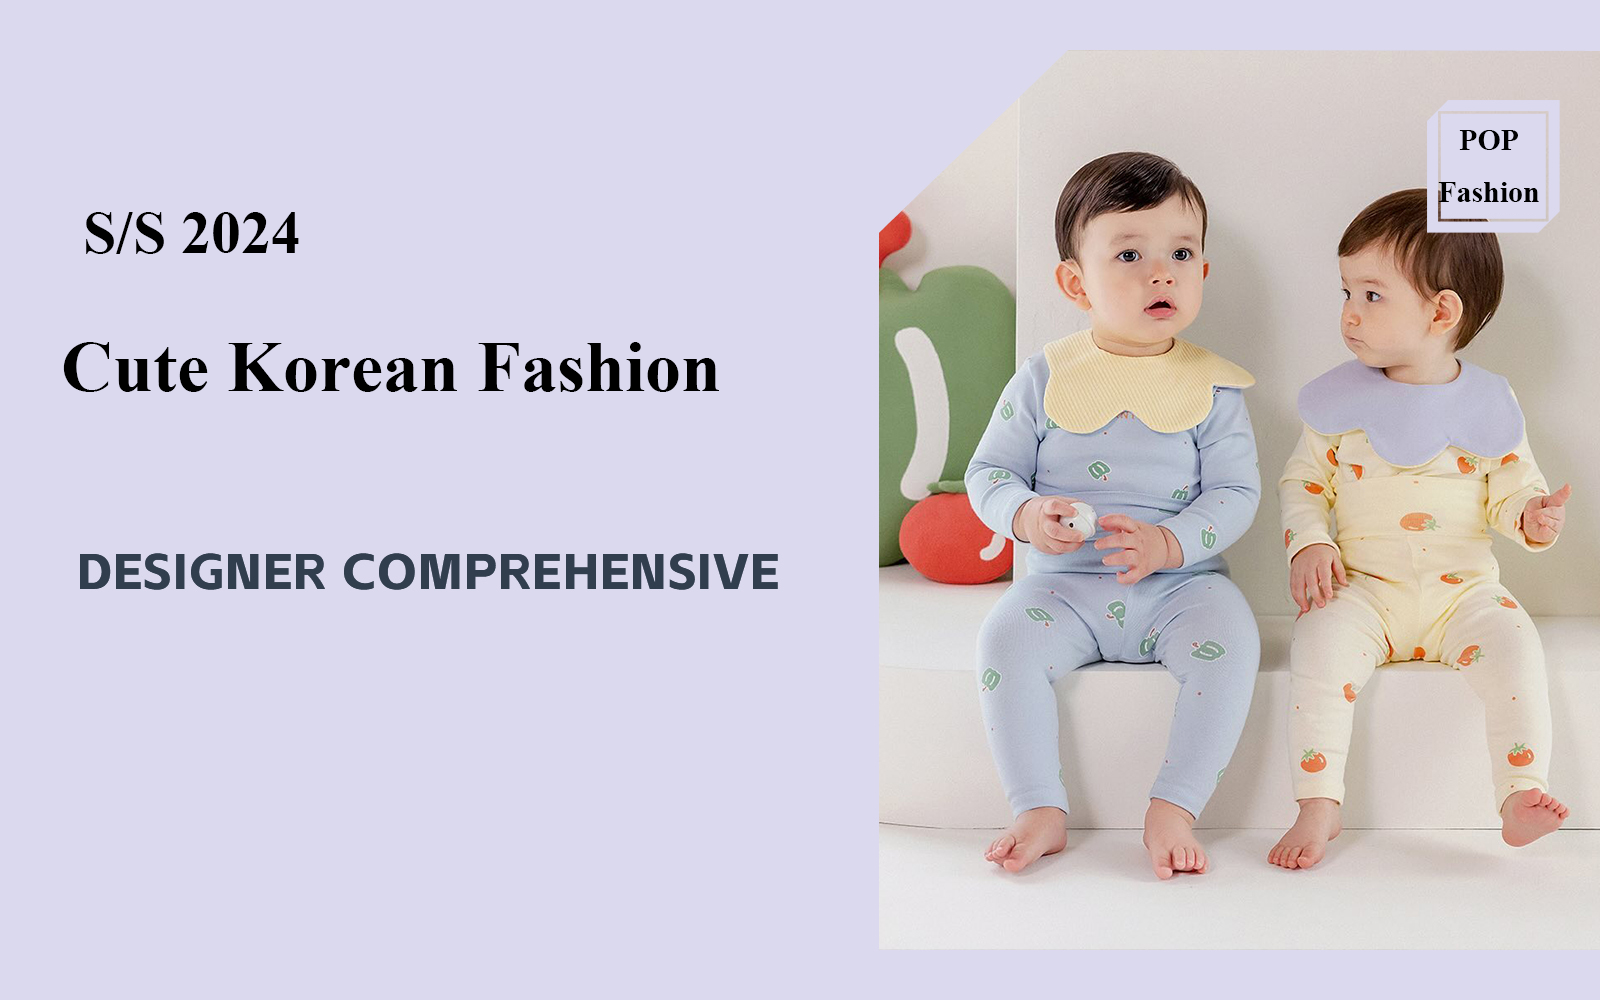 Cute Korean Fashion -- The Comprehensive Analysis of Korean Designer Brands for Infantswear